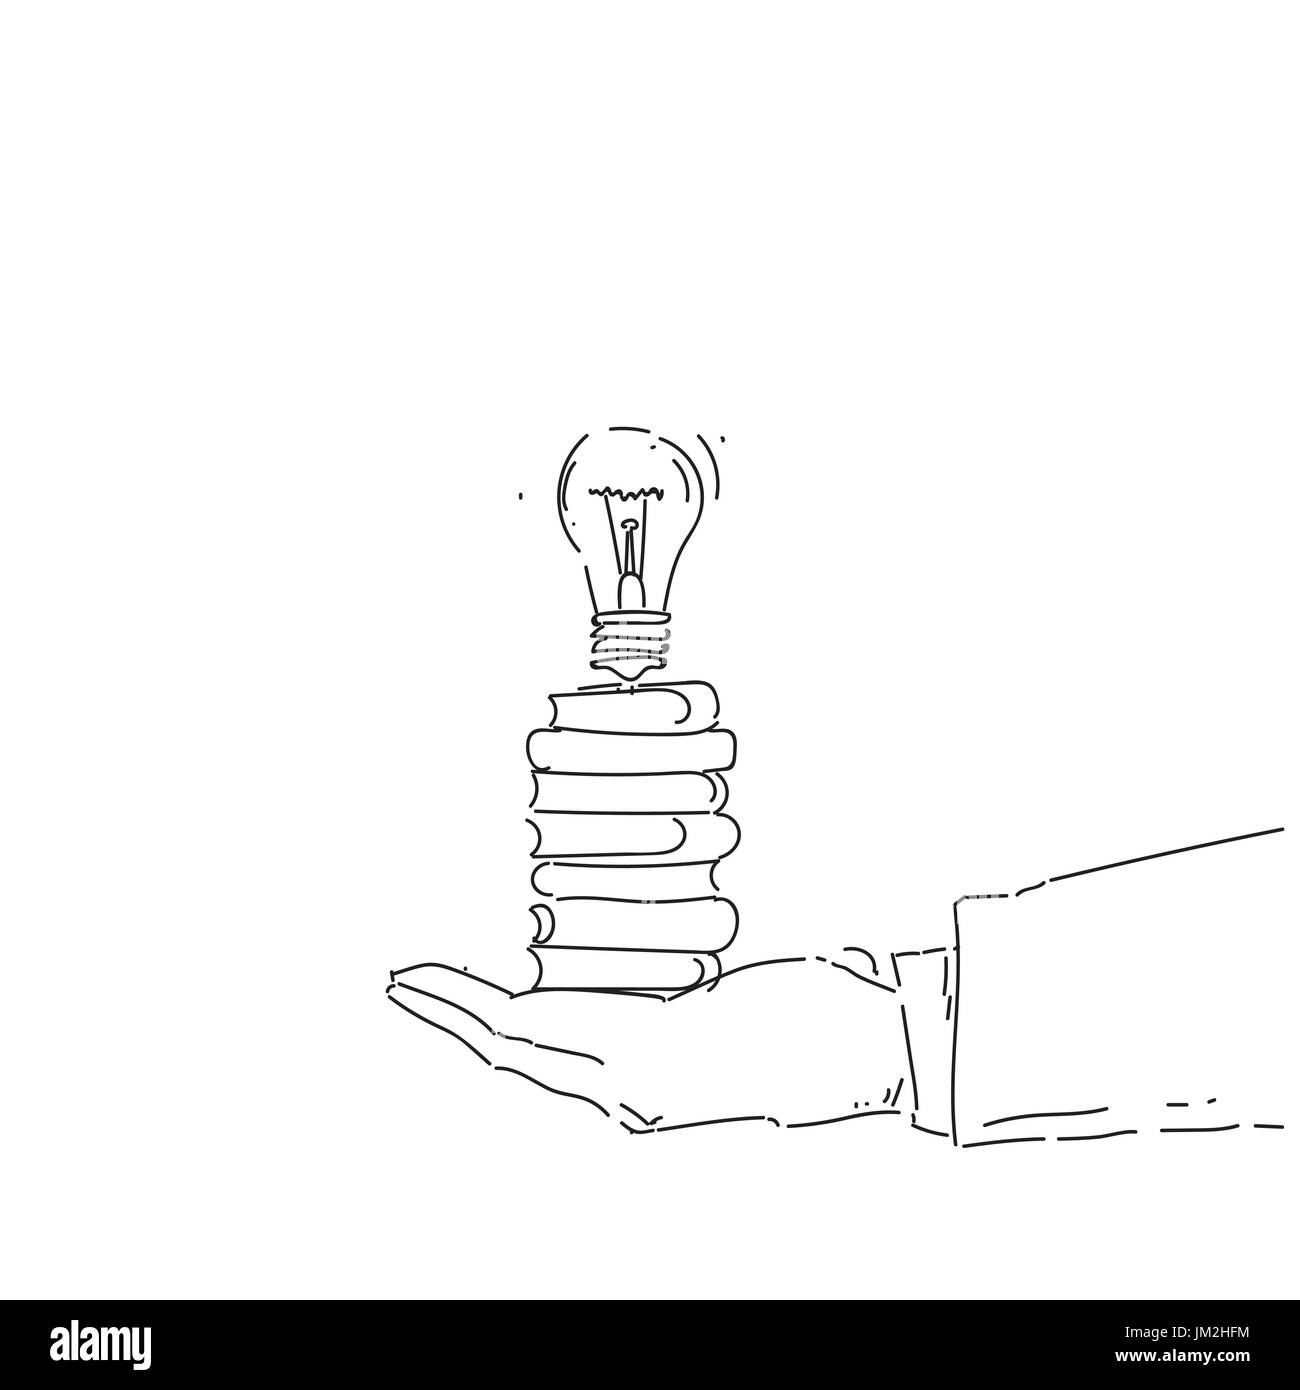 Abstrakt Business Mann Hand Holding Glühbirne neue kreative Idee-Konzept Stock Vektor